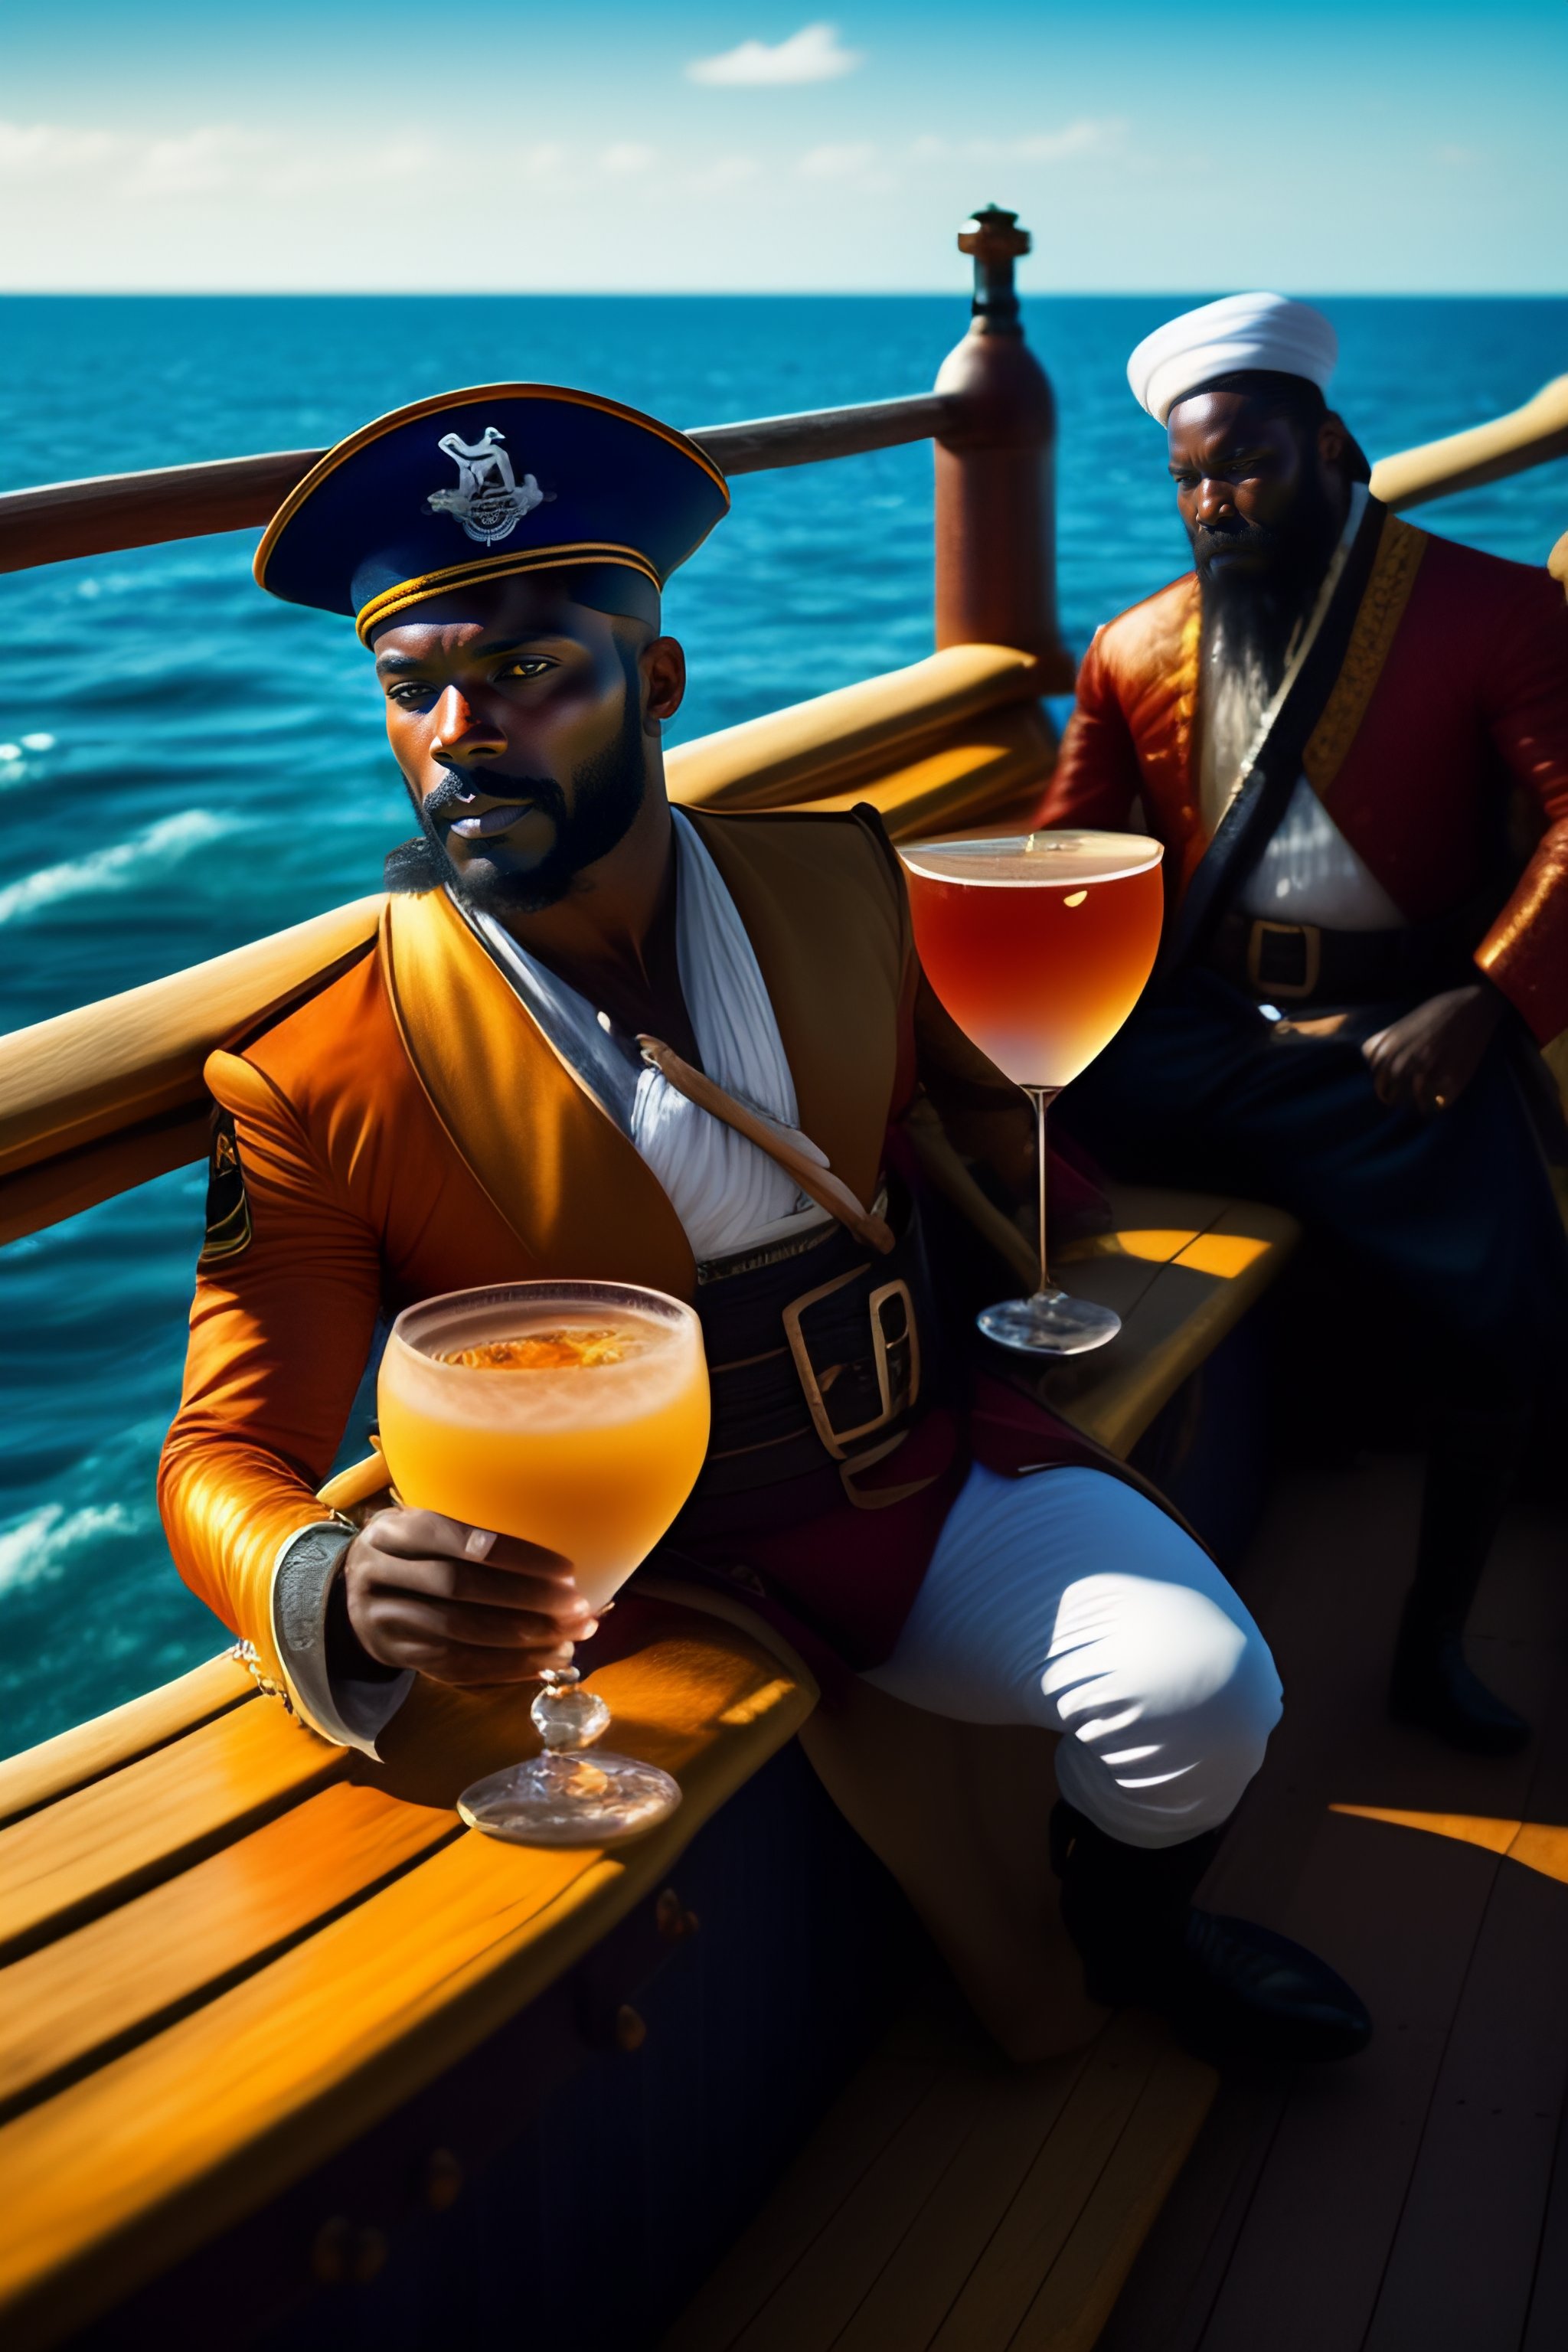 Lexica - Pirates drinking rhum on ship deck